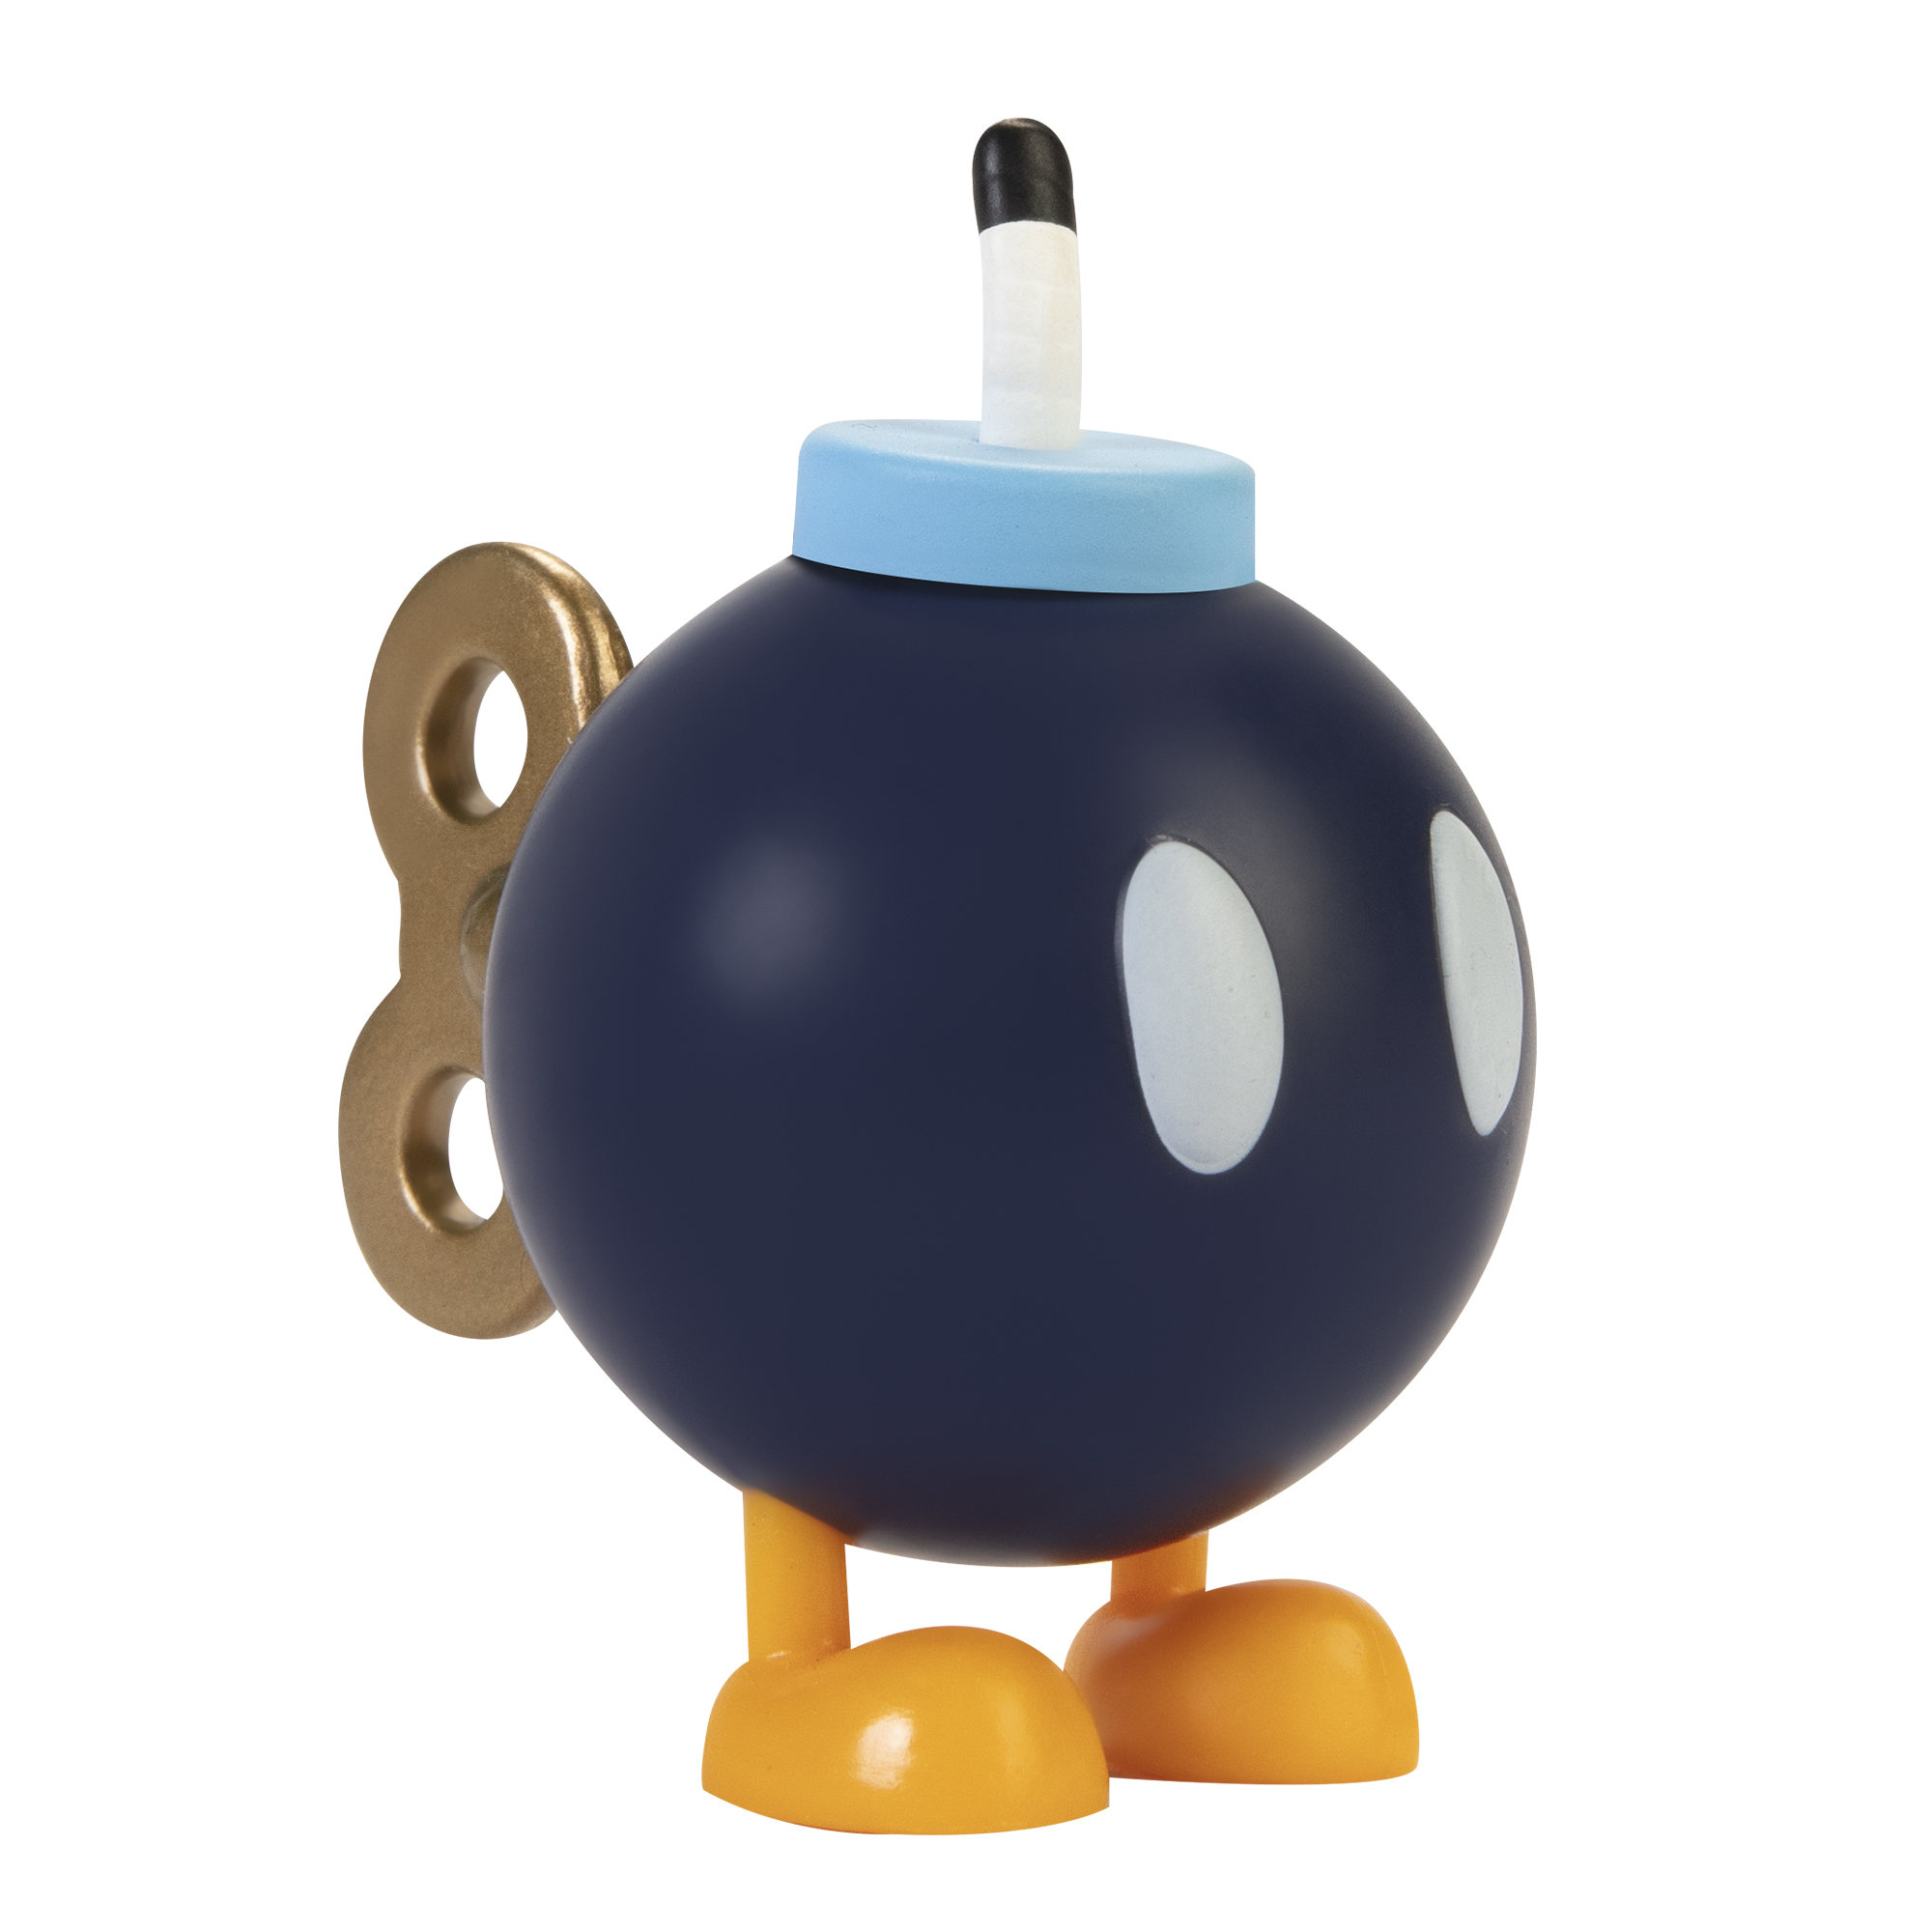 Super Mario Articulated Action Figure 2.5″ Bob-Omb